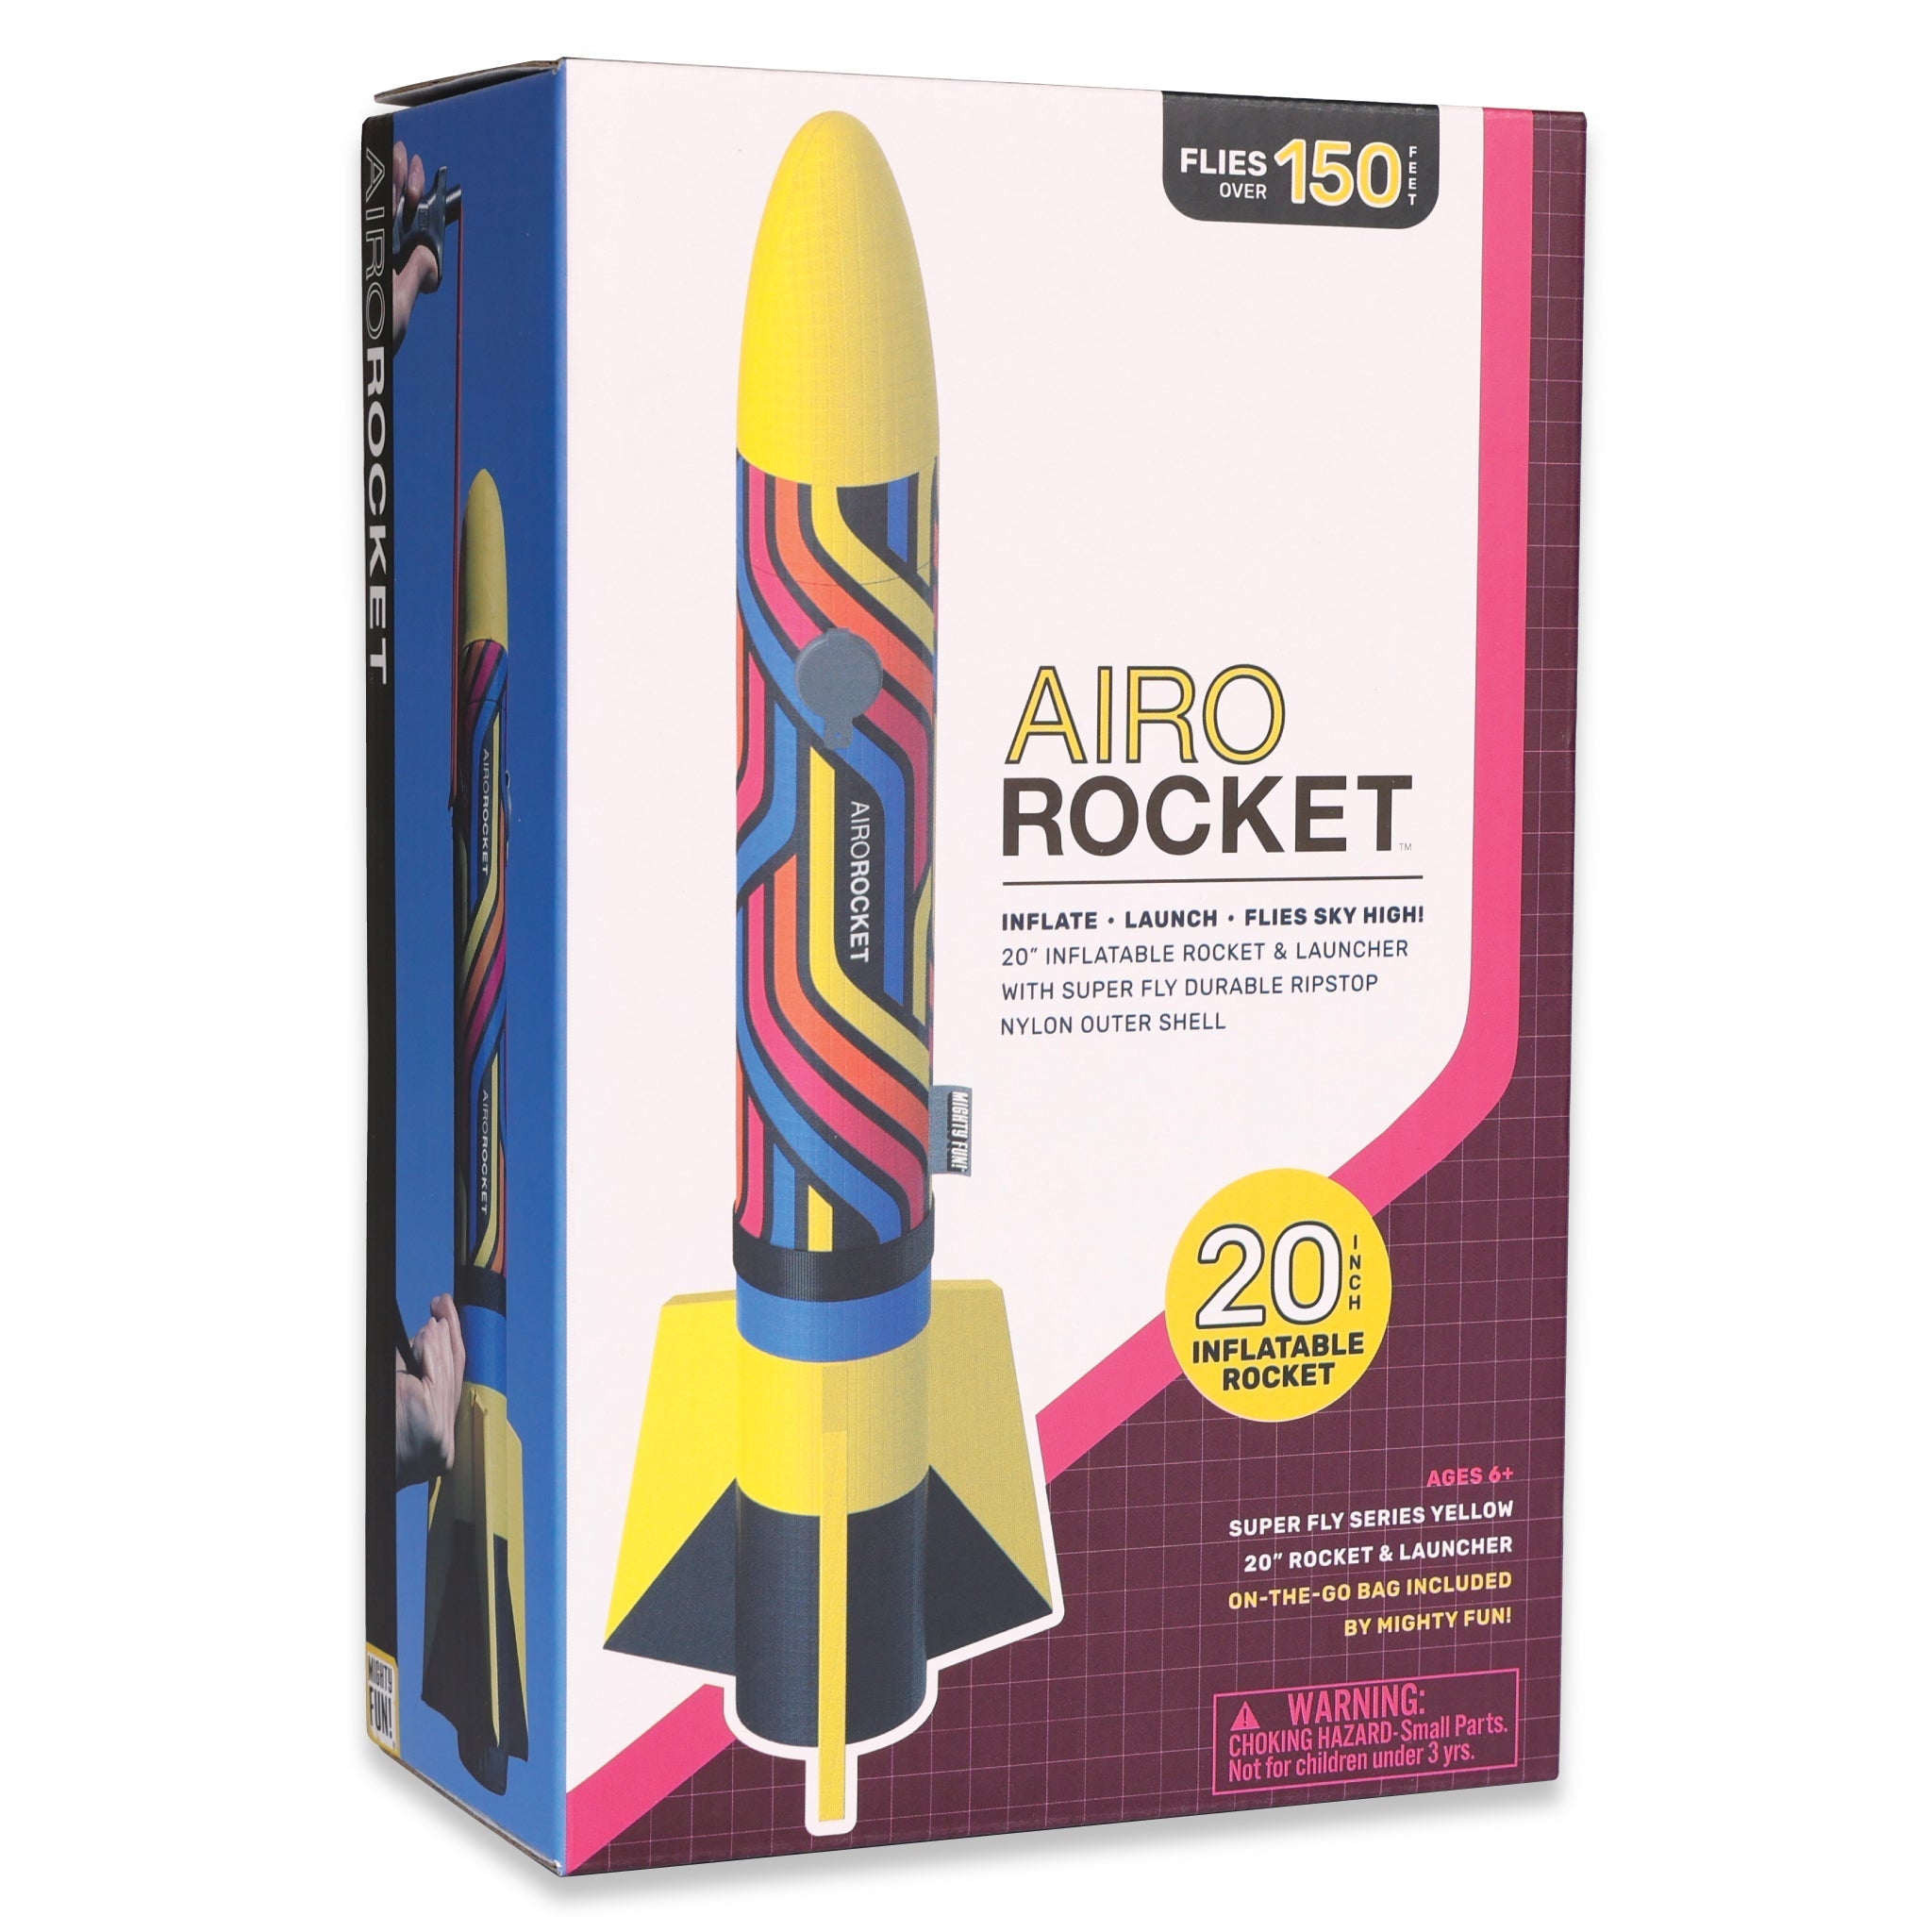 Yellow Airo Rocket toy rocket kids gift box by Mighty Fun!